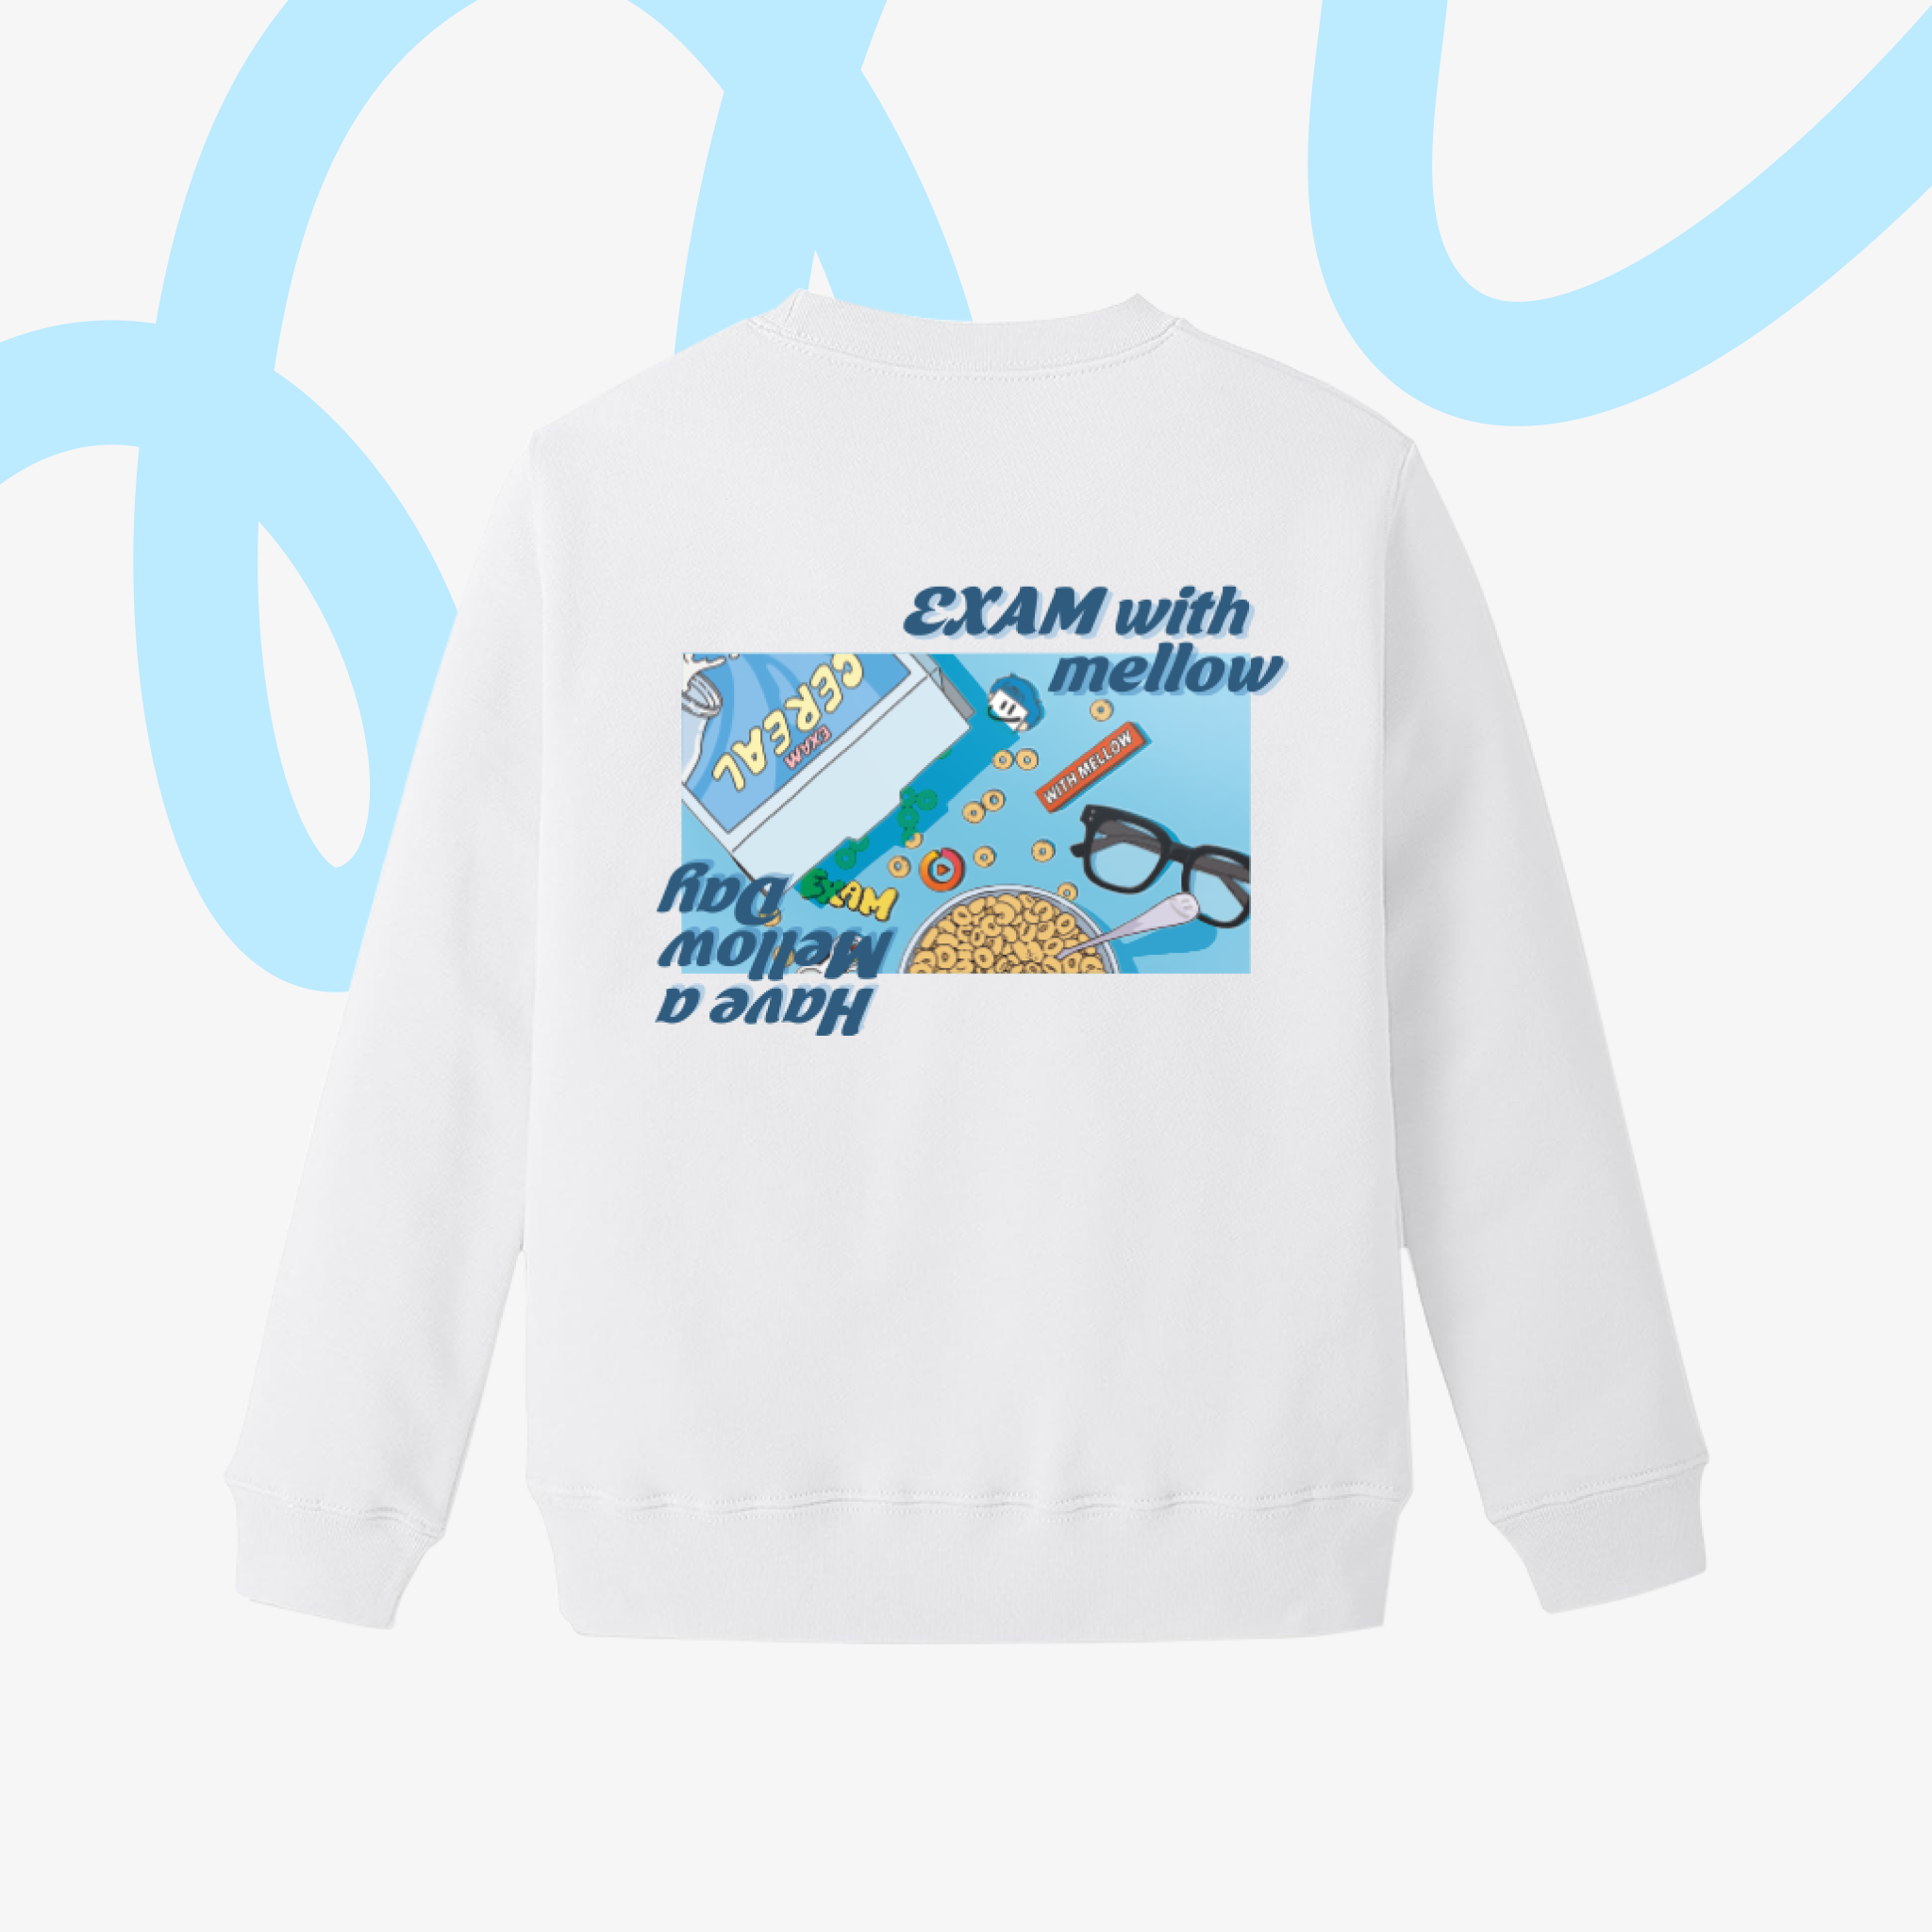 EXAM with mellow 〜EXAM   パーカー、Tシャツ、トレーナーDbD